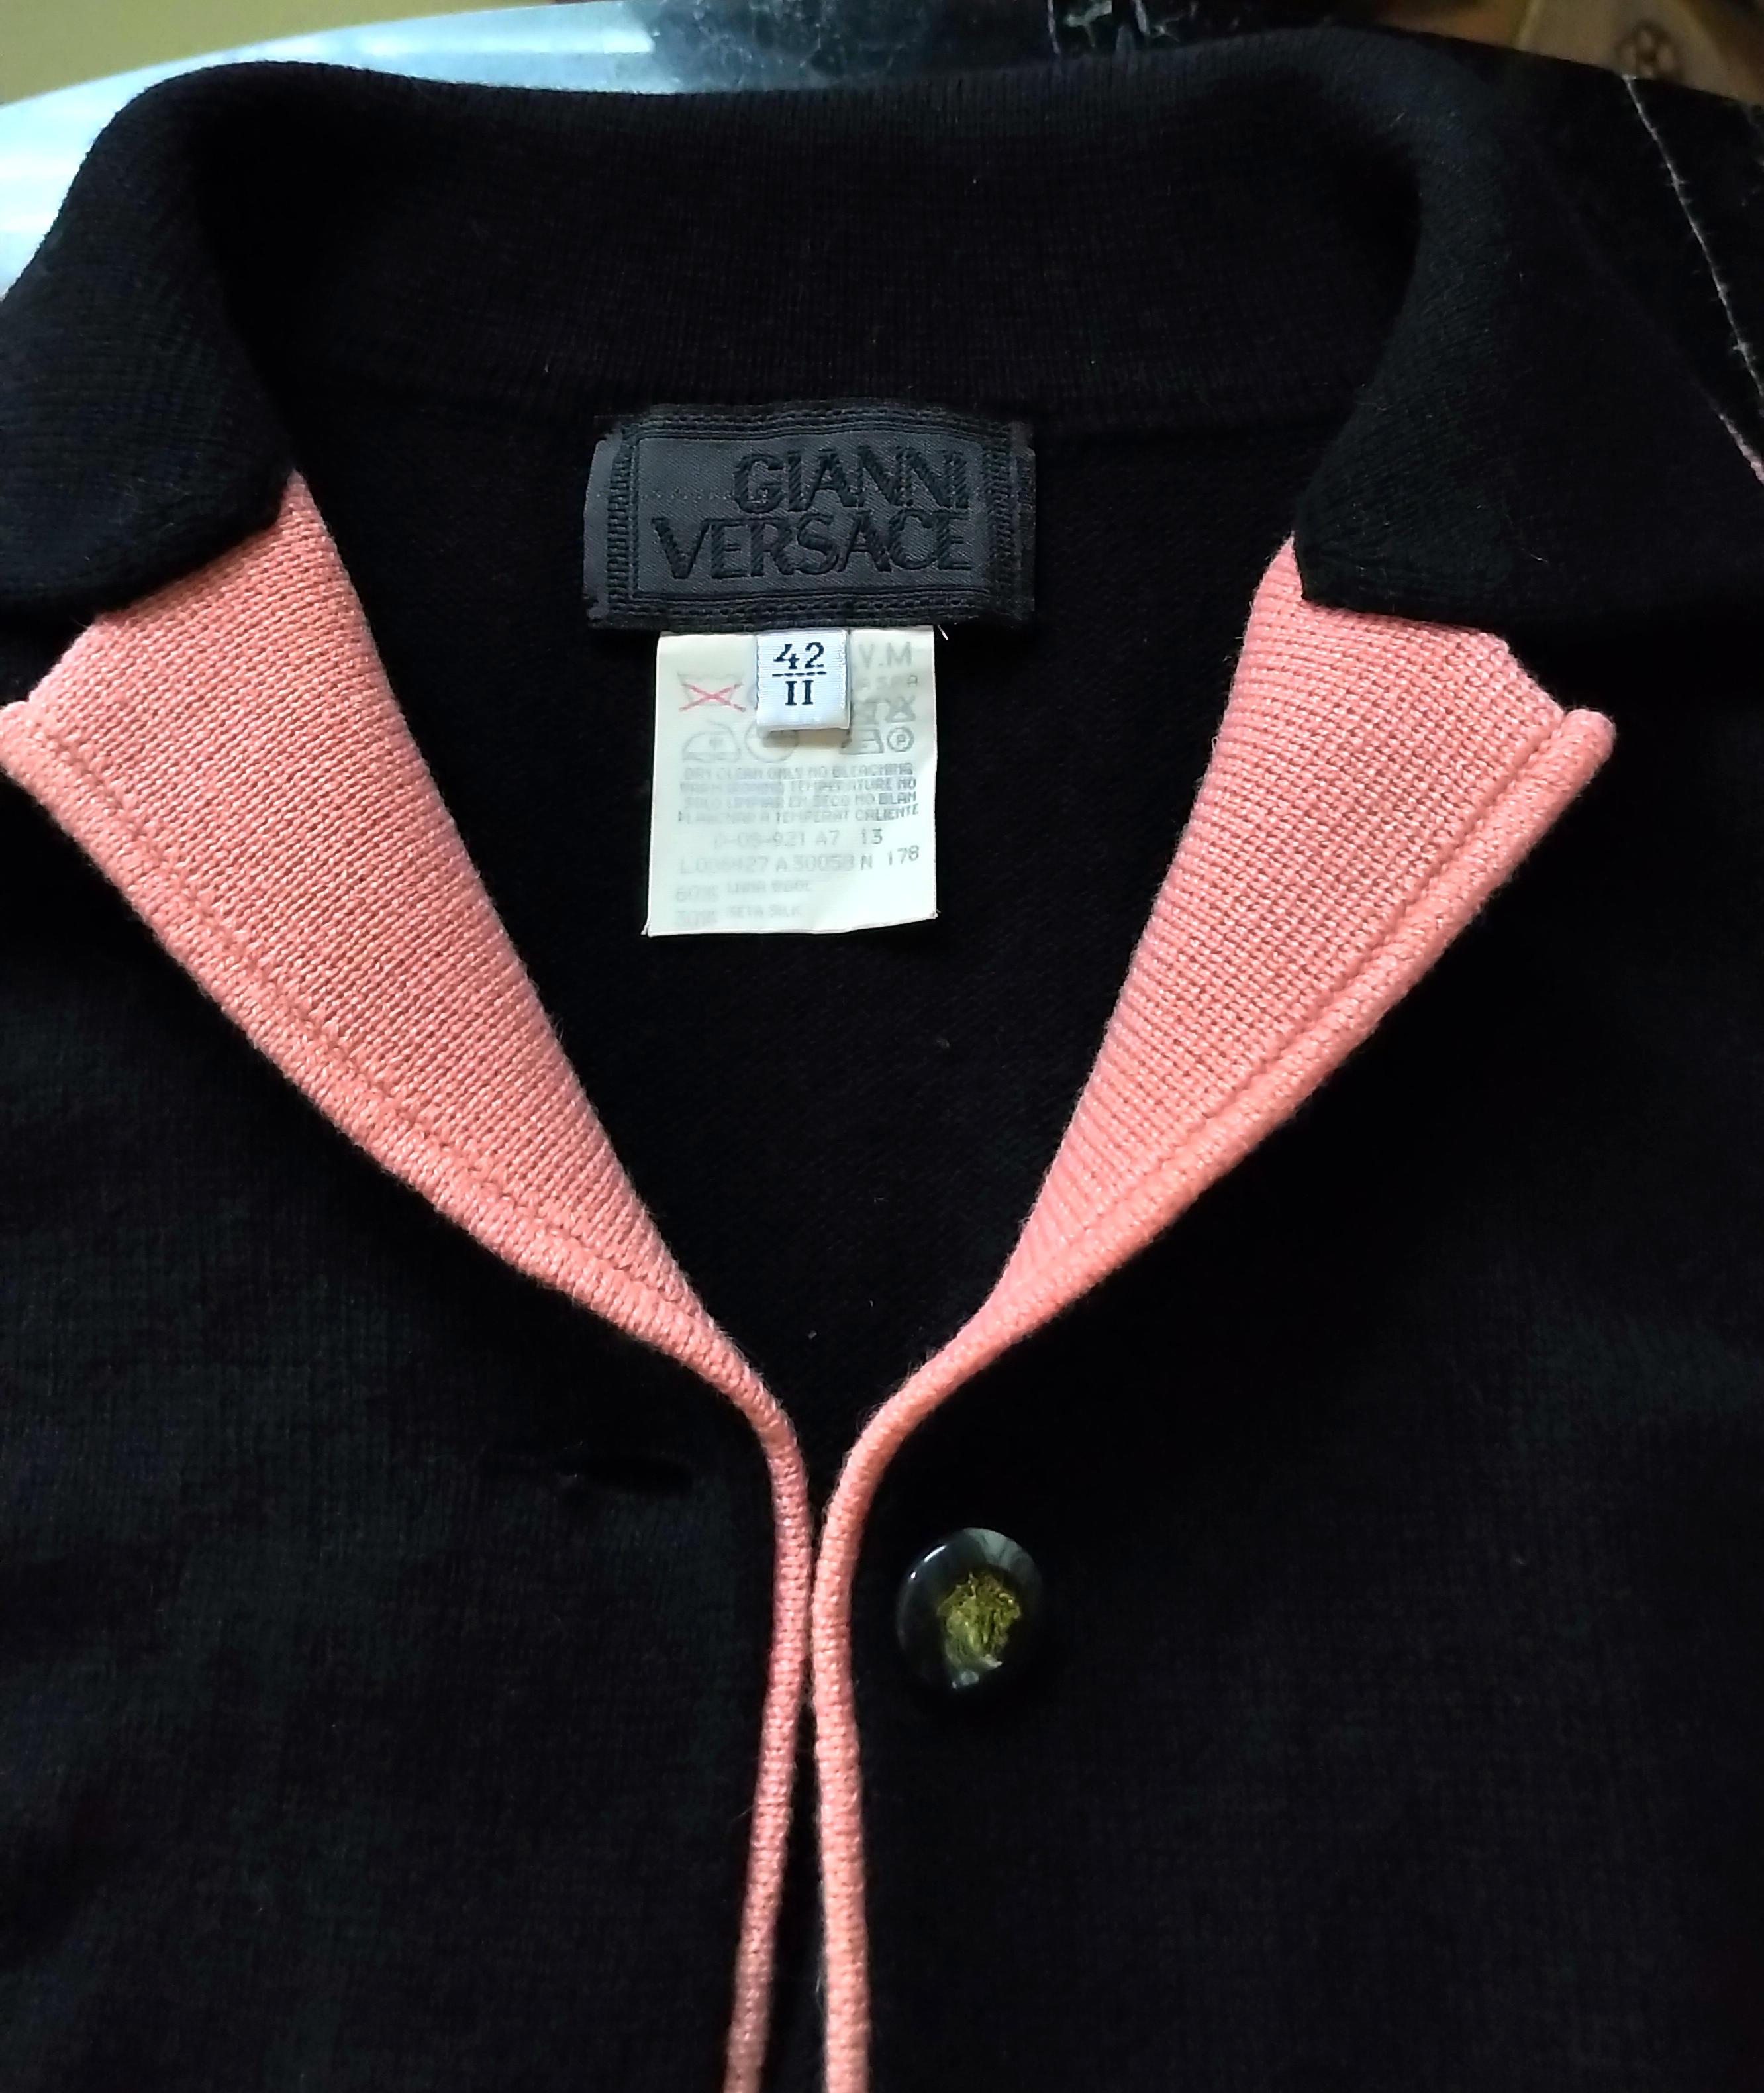 Rare 1990's Gianni Versace Medusa Black & Coral Sweater Cardigan IT 42/ US 4 6 For Sale 7